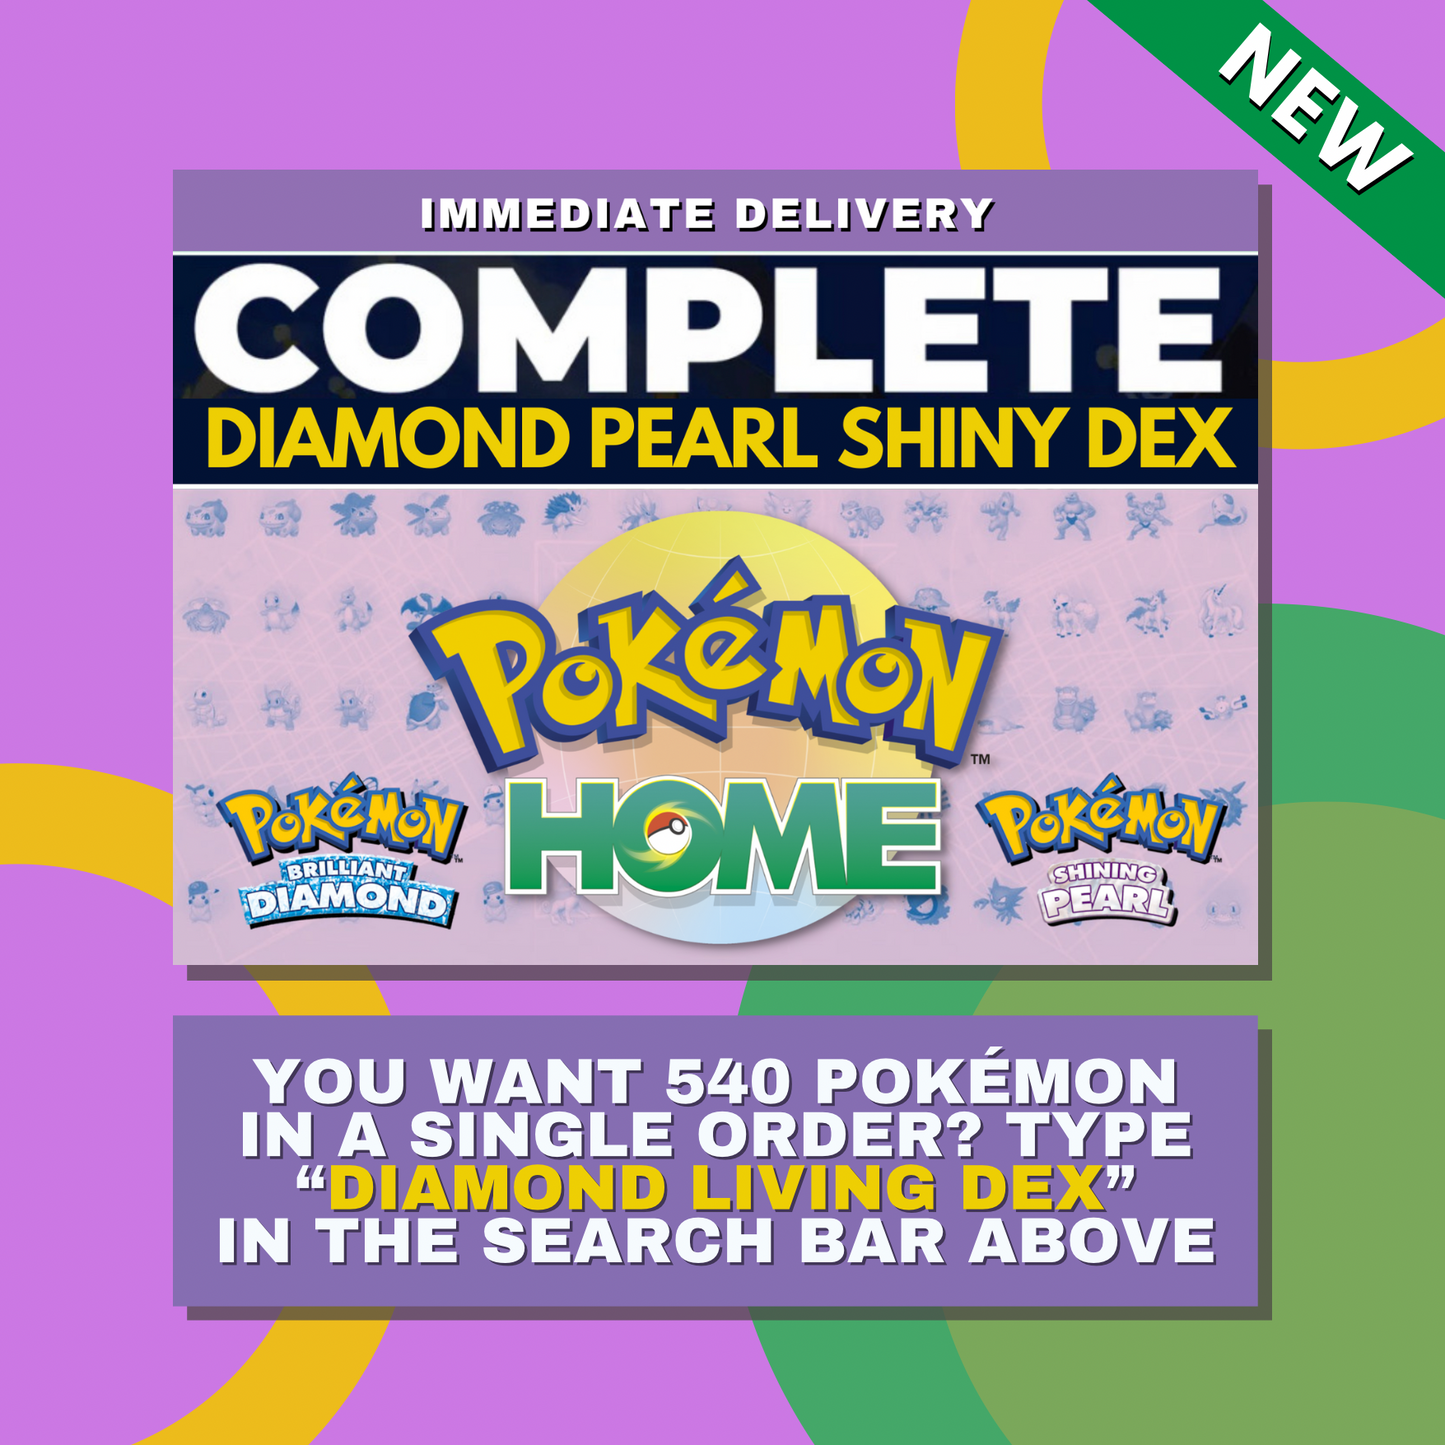 Breloom  Shiny ✨ or Non Shiny Pokémon Brilliant Diamond Shining Pearl Battle Ready 6 IV Competitive 100%  Legit Level 100 Customizable Custom OT